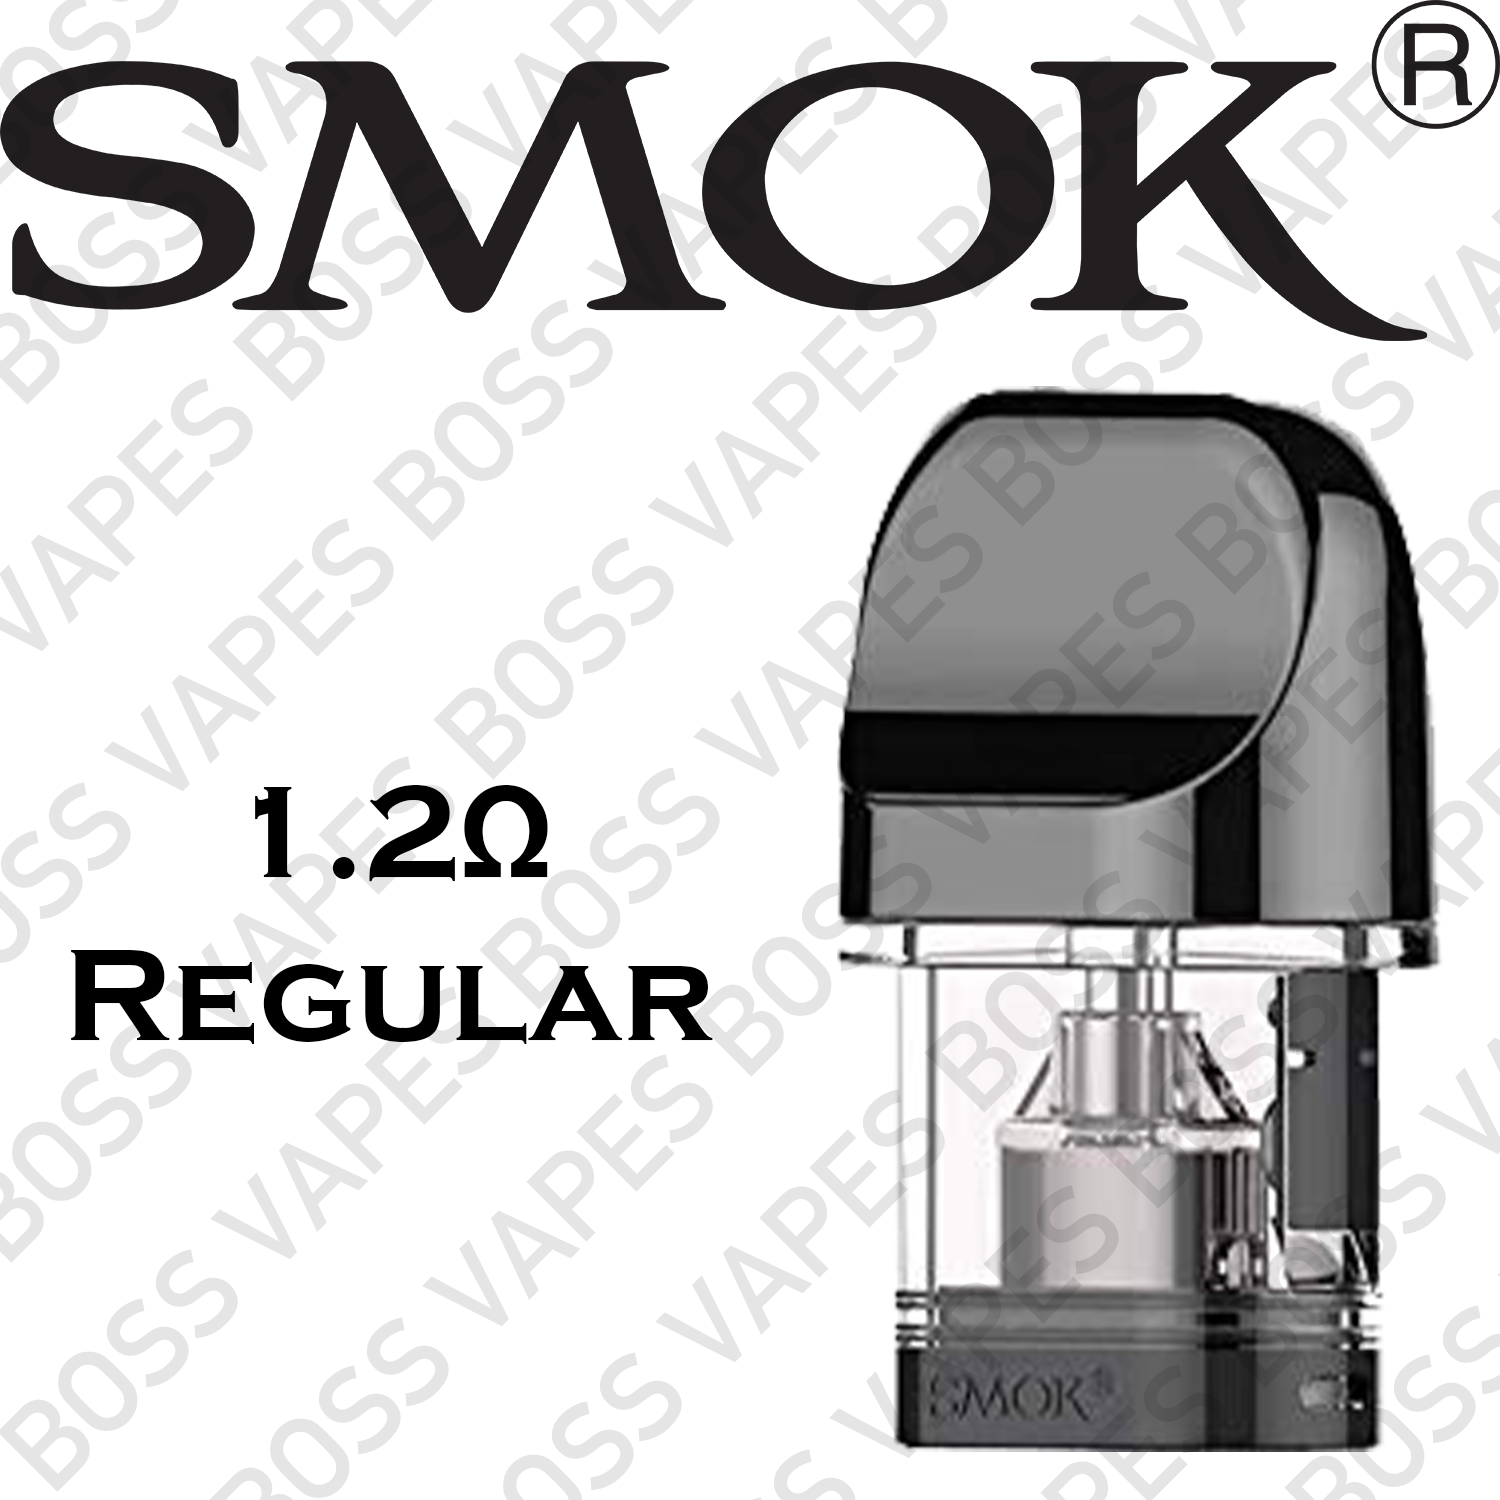 SMOK NOVO 1 REPLACEMENT PODs (Price Per POD) - Boss Vapes